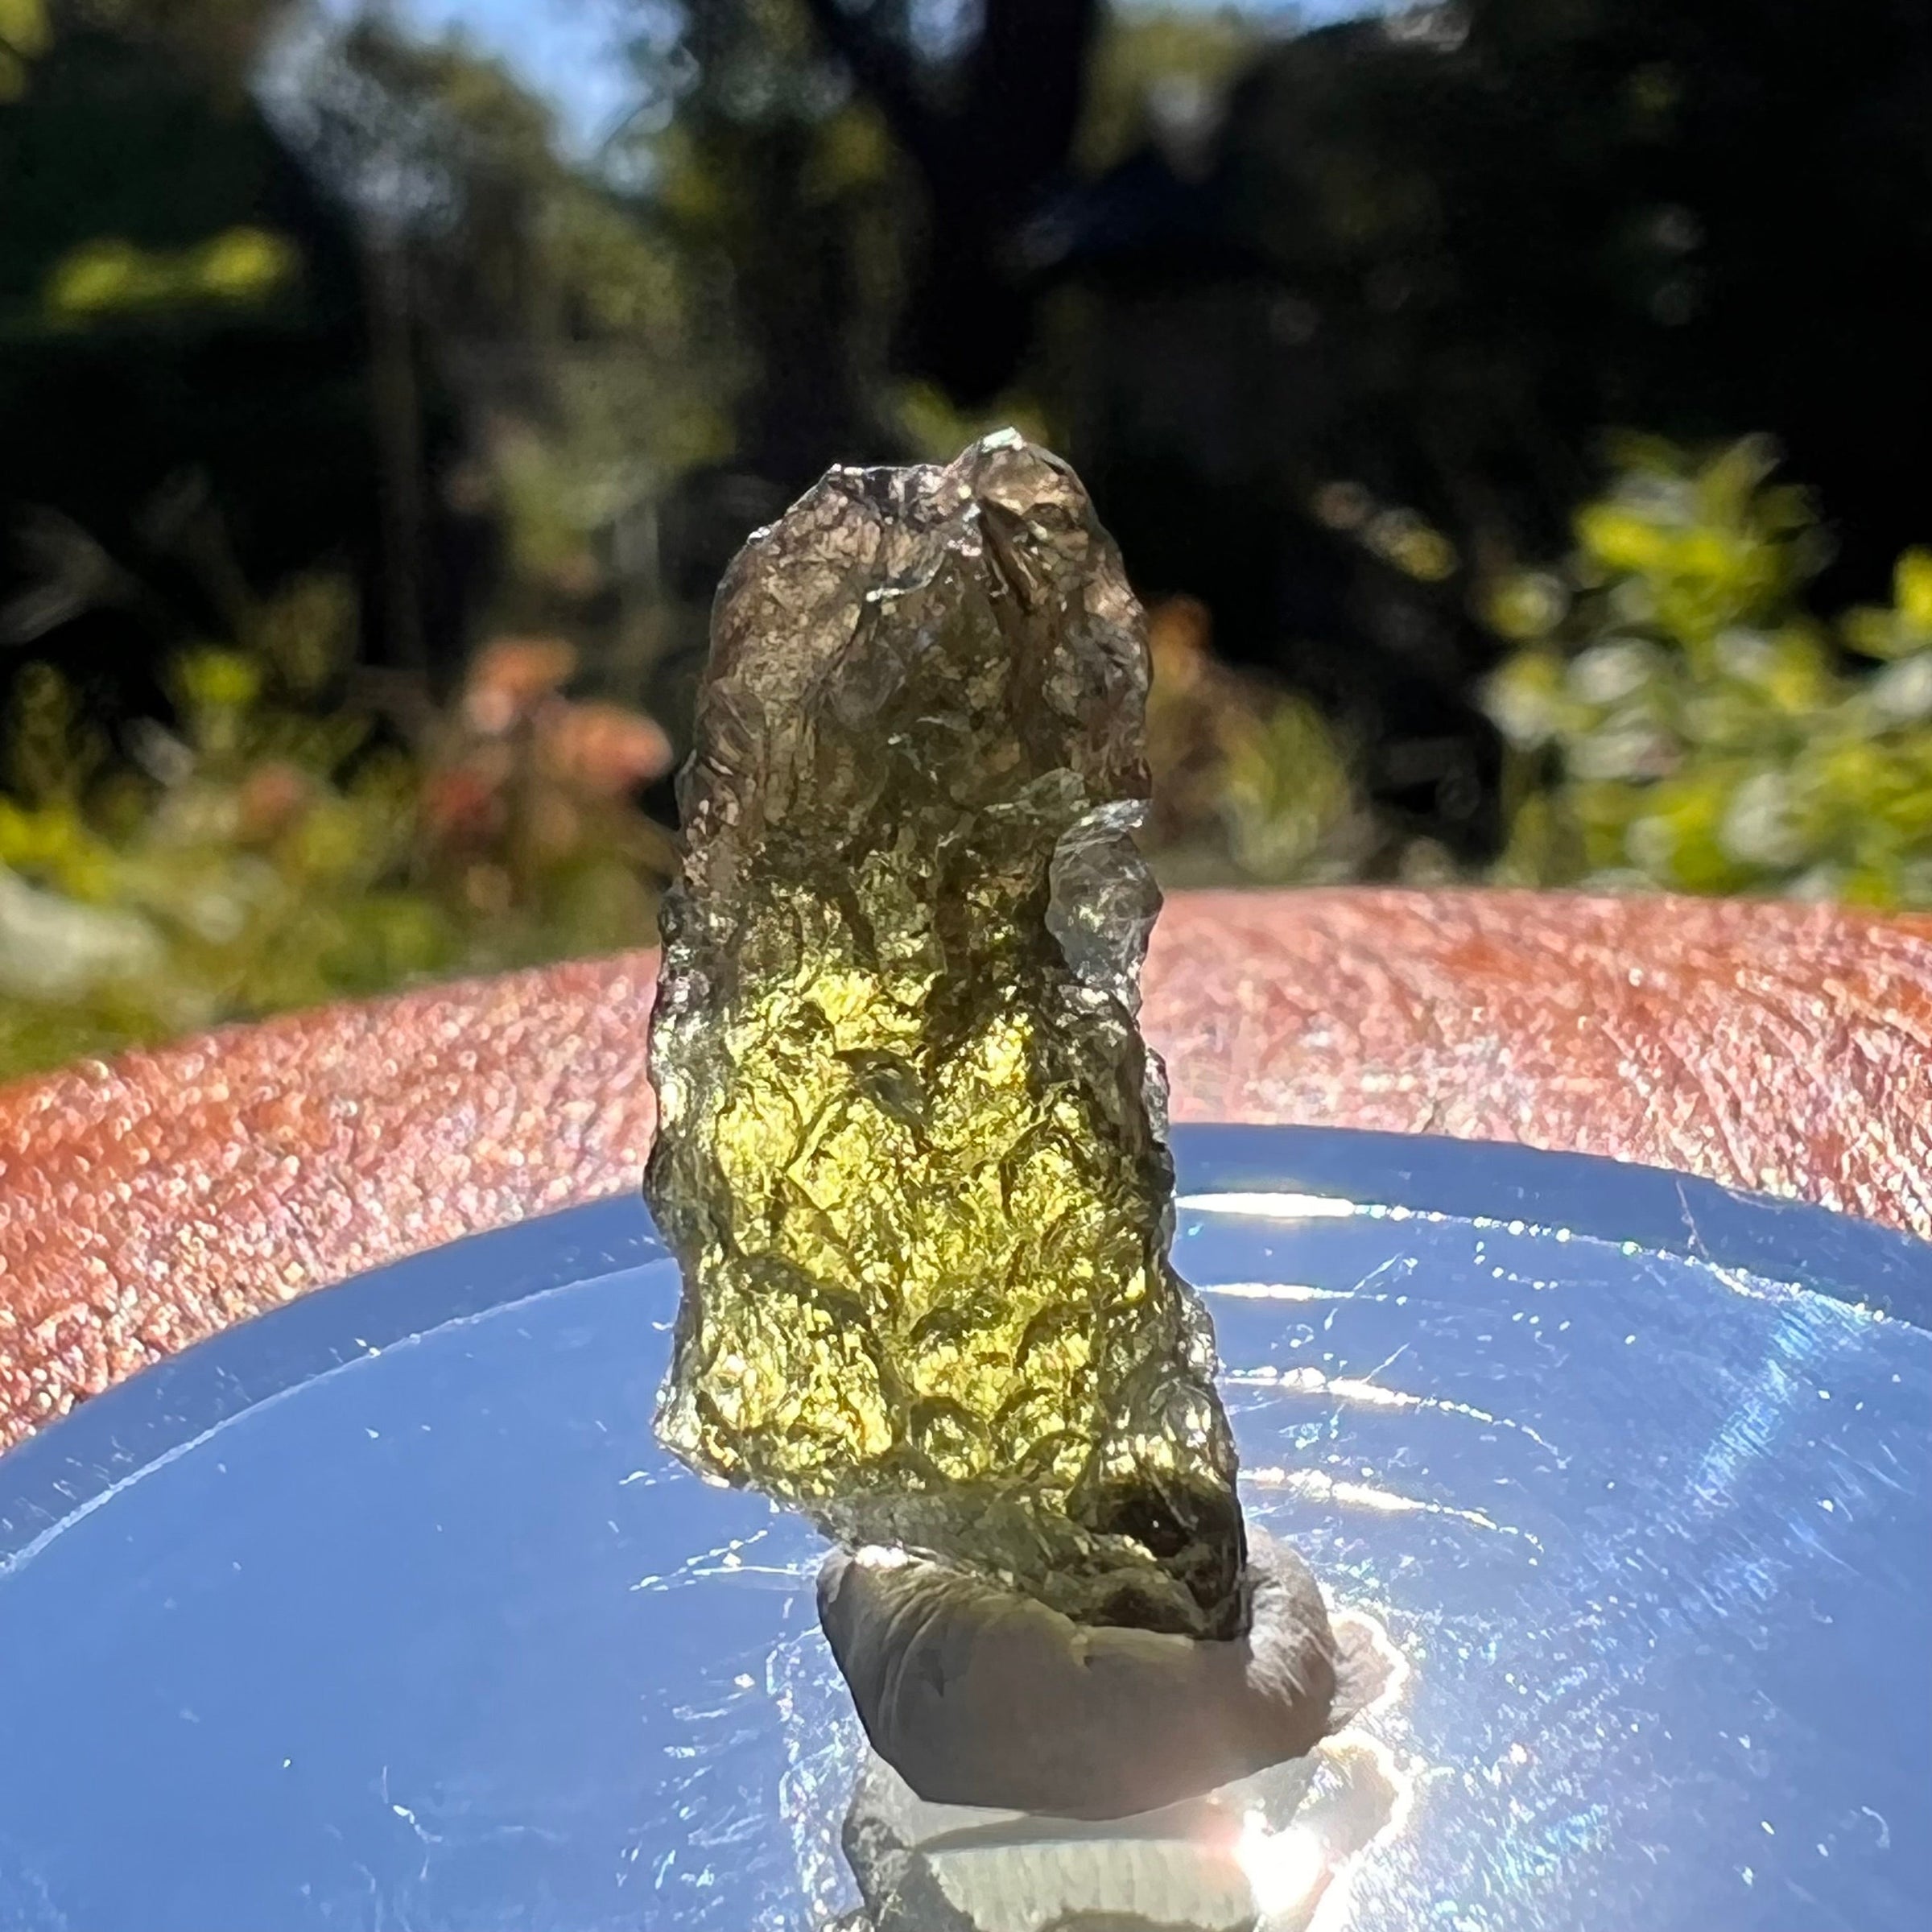 Moldavite 1.2 grams #1597-Moldavite Life